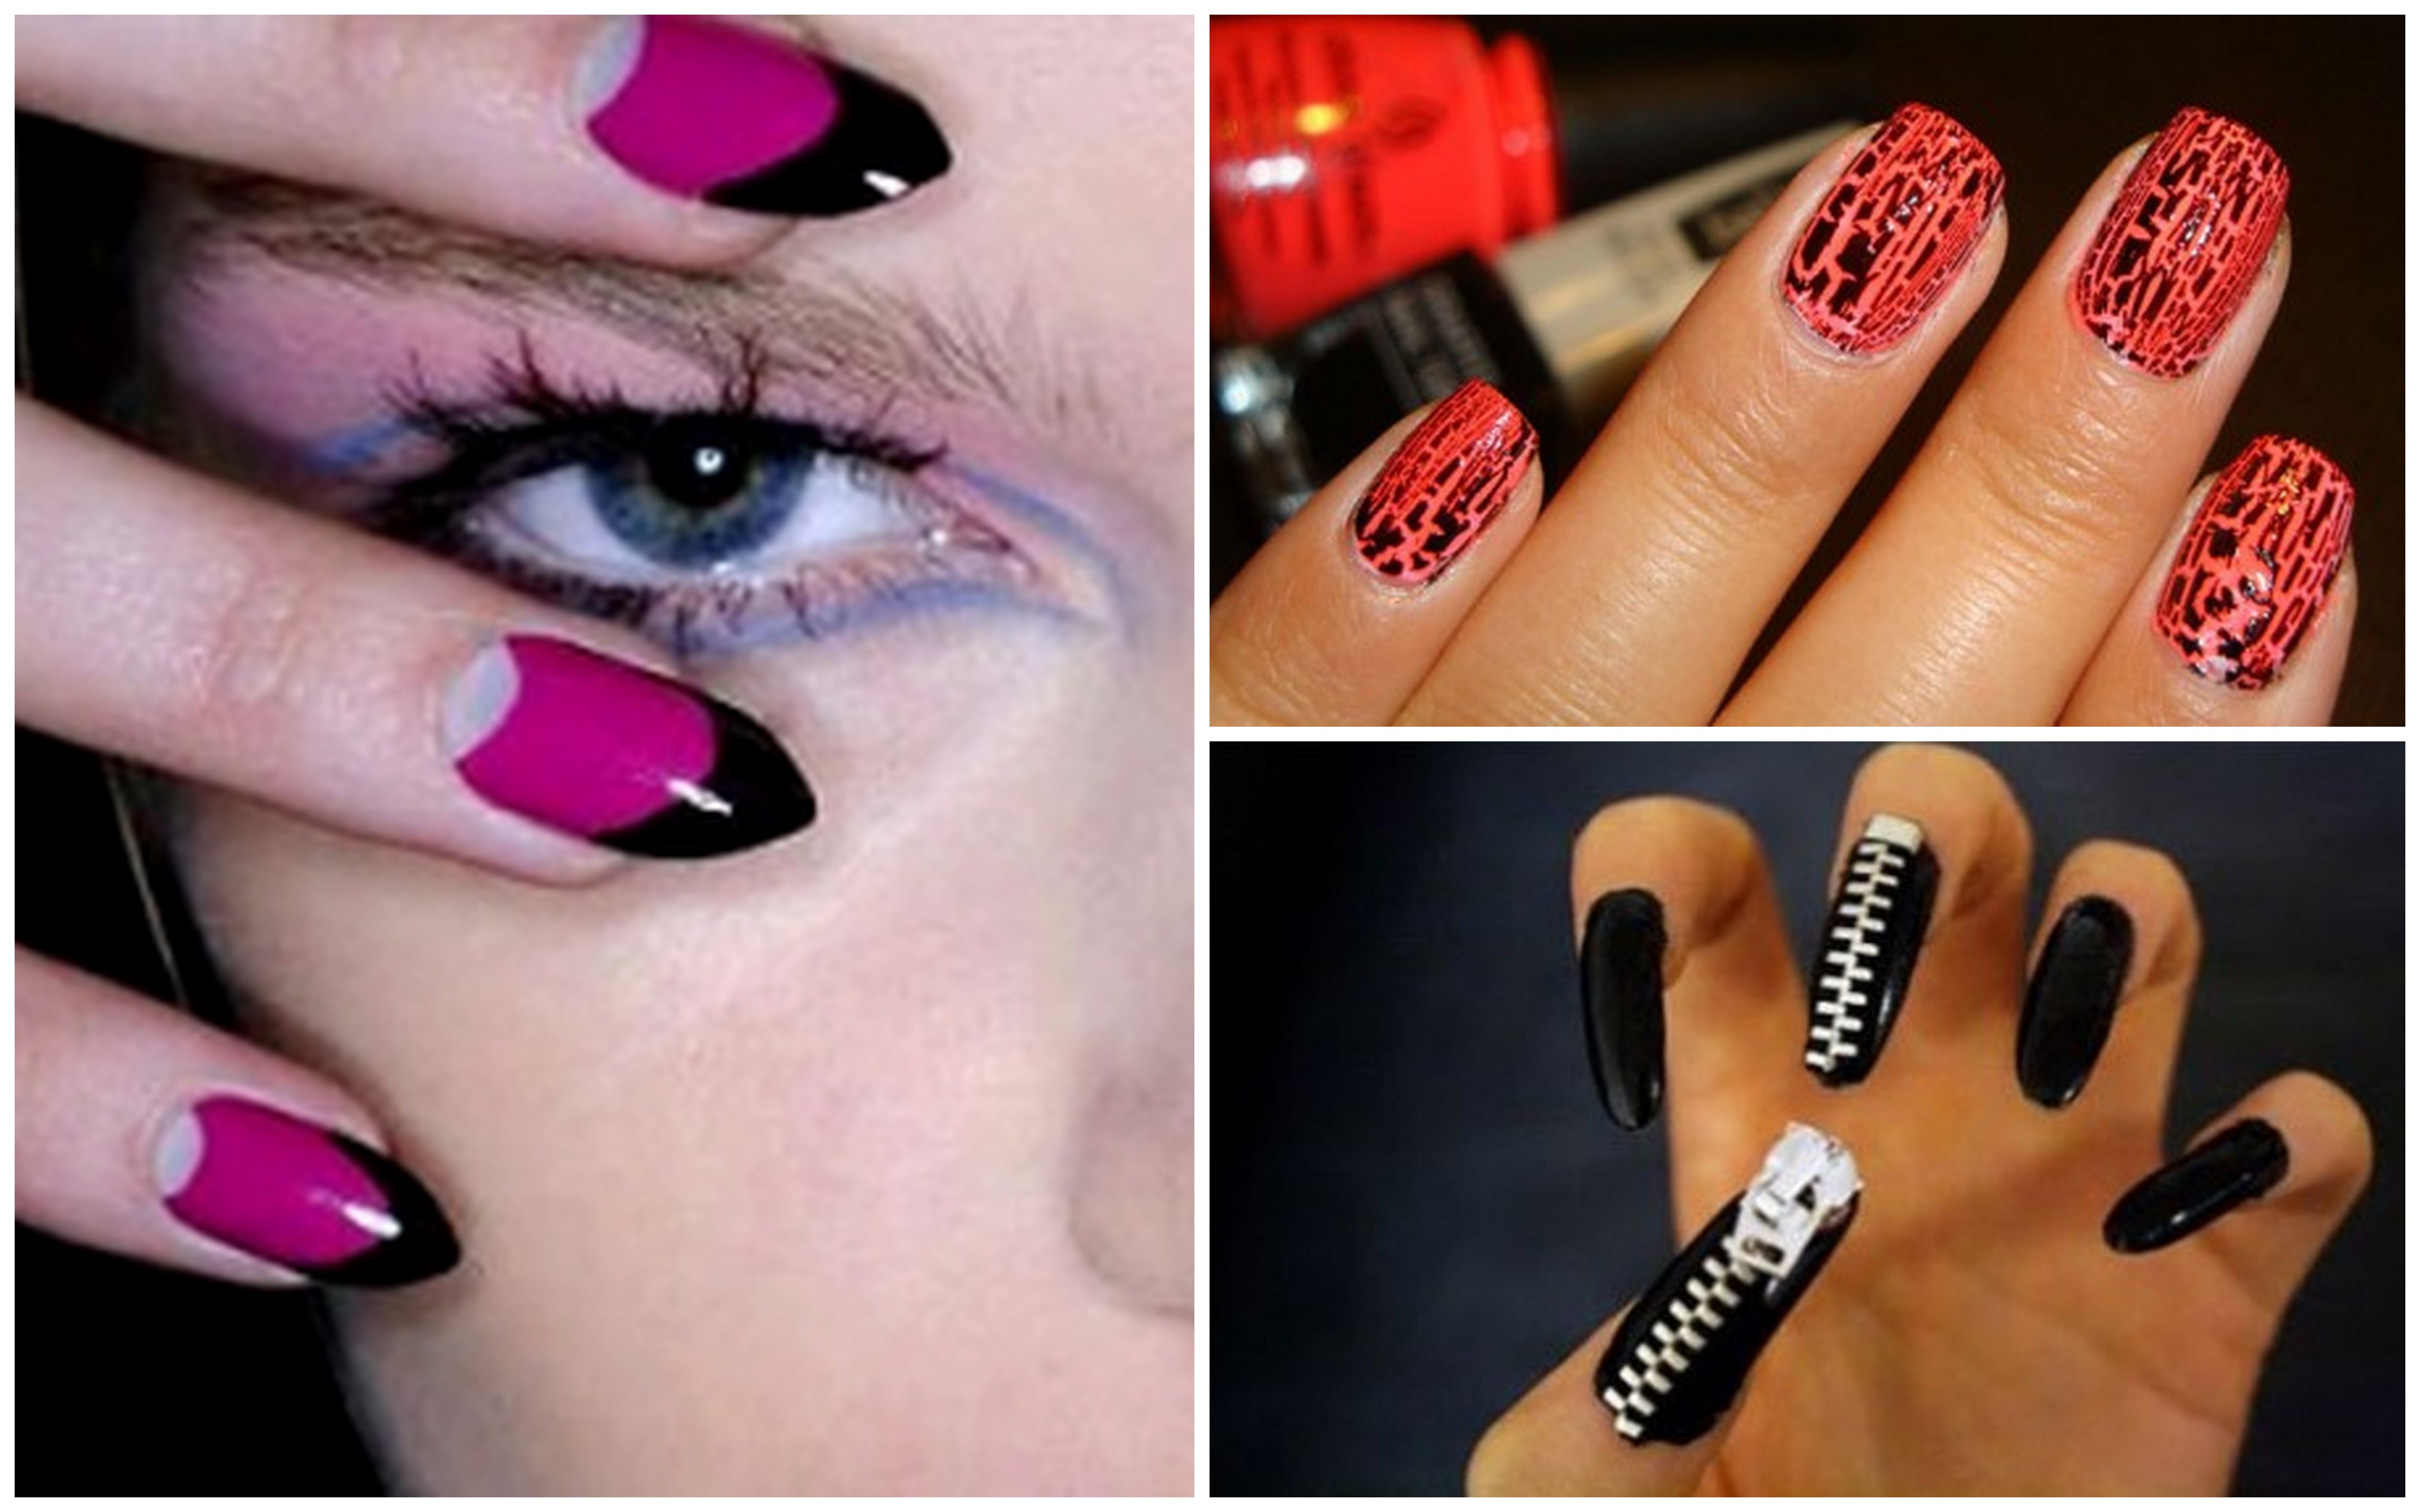 7. Famous Nail Art Designs on Pinterest - wide 8